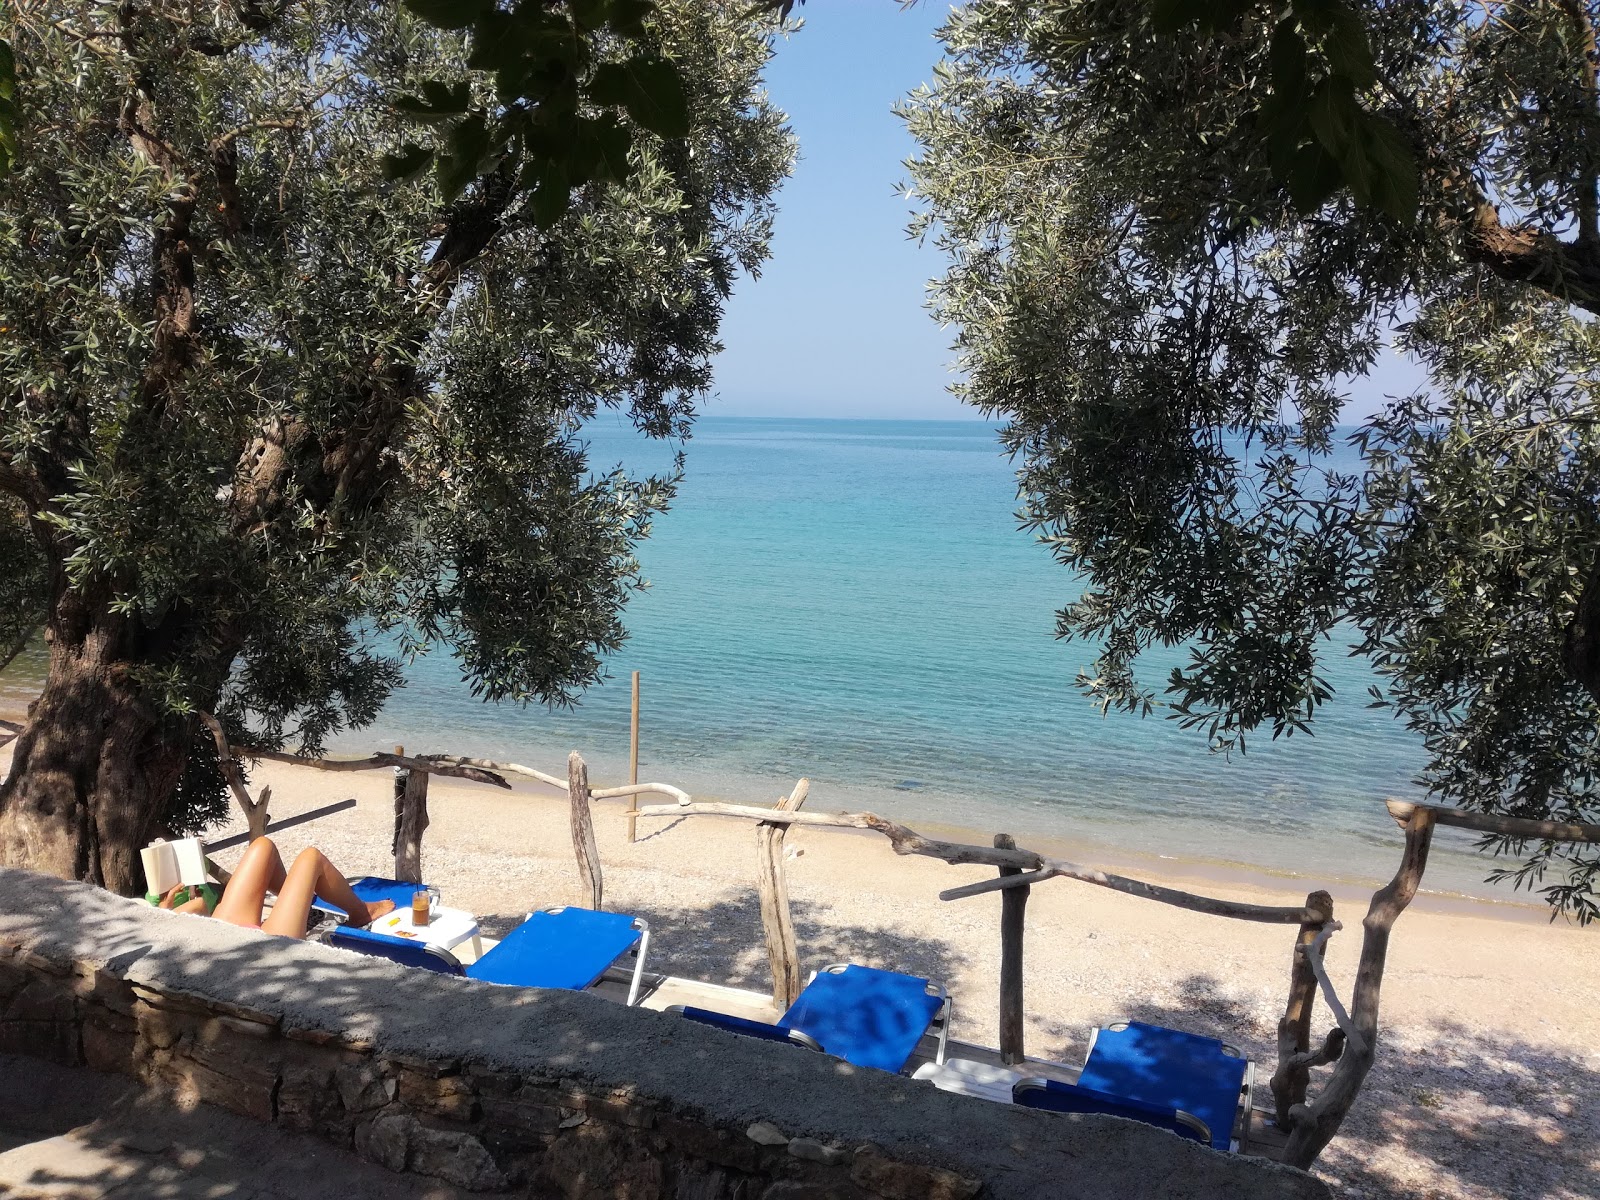 Foto di Olive beach ubicato in zona naturale